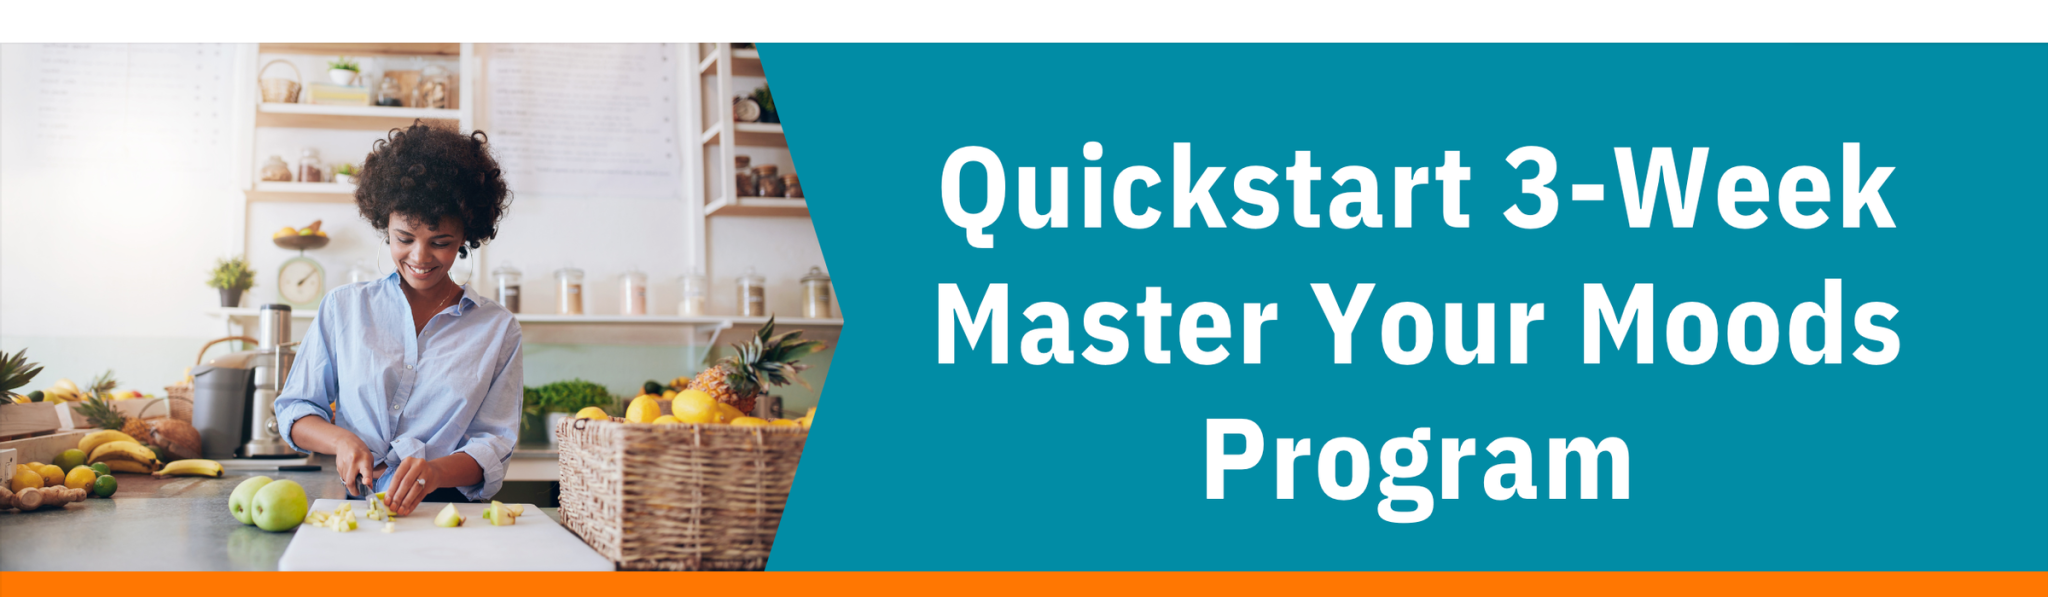 Quickstart 3-Week Master Your Moods Program